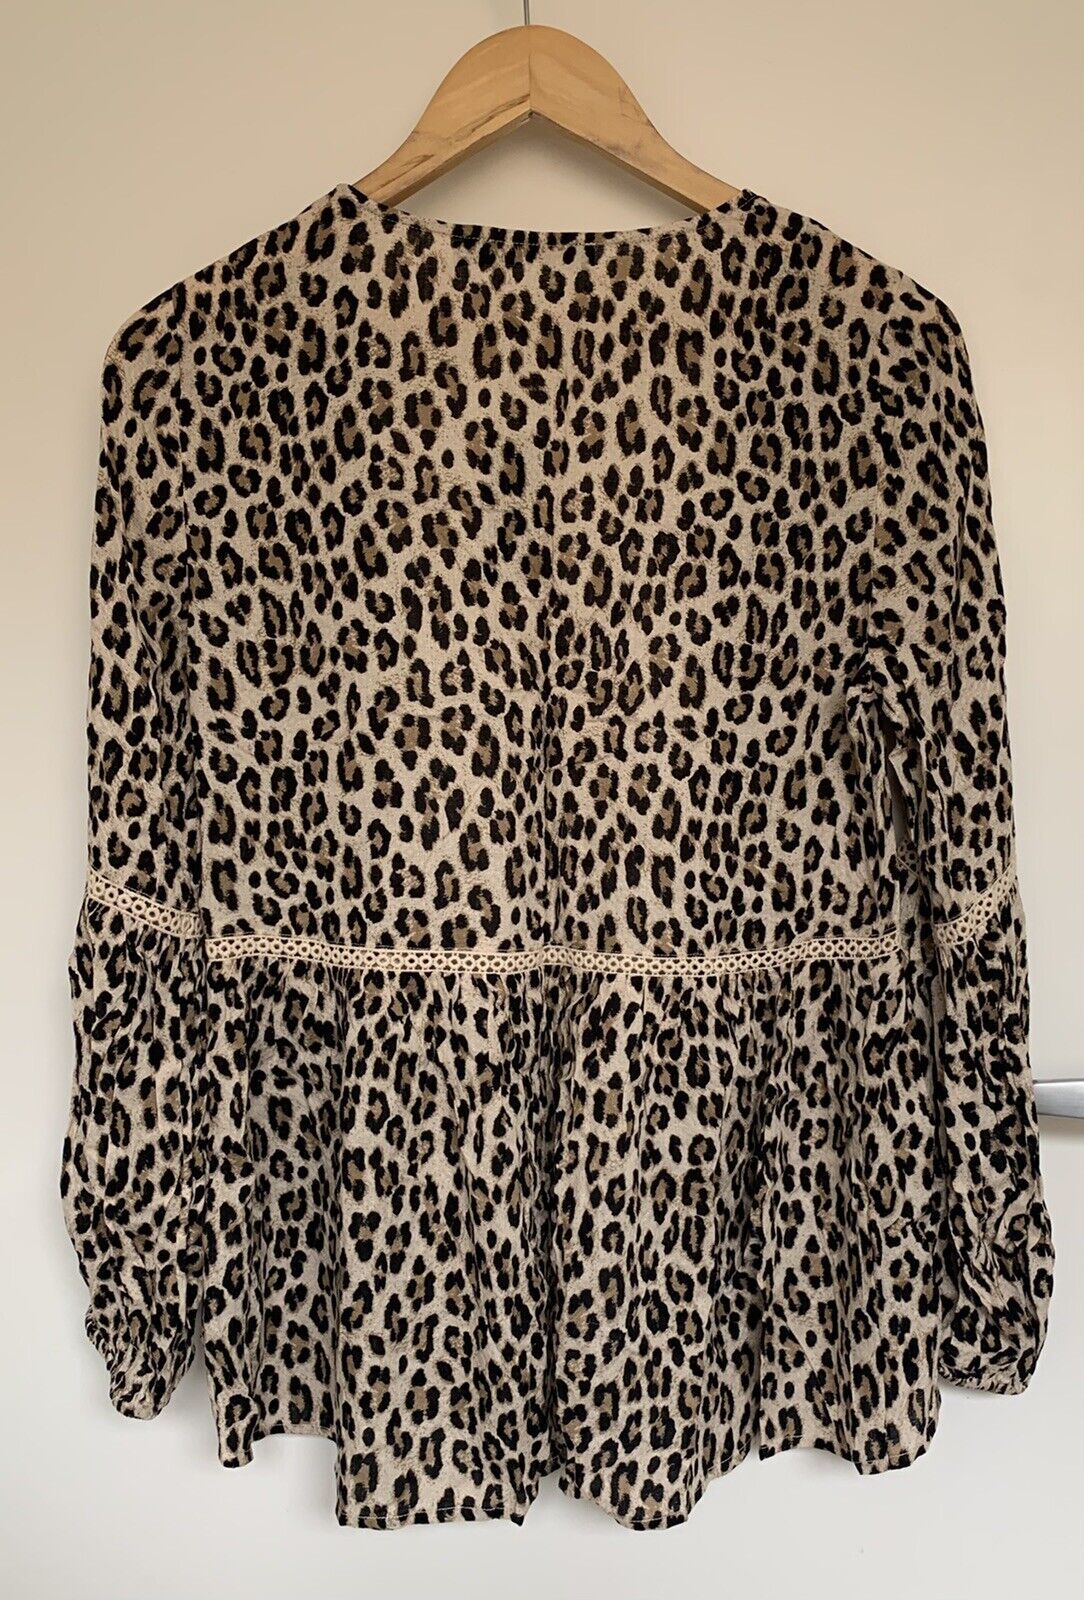 Sportsgirl Leopard Print Kimono Duster Jacket Size 8 | eBay AU